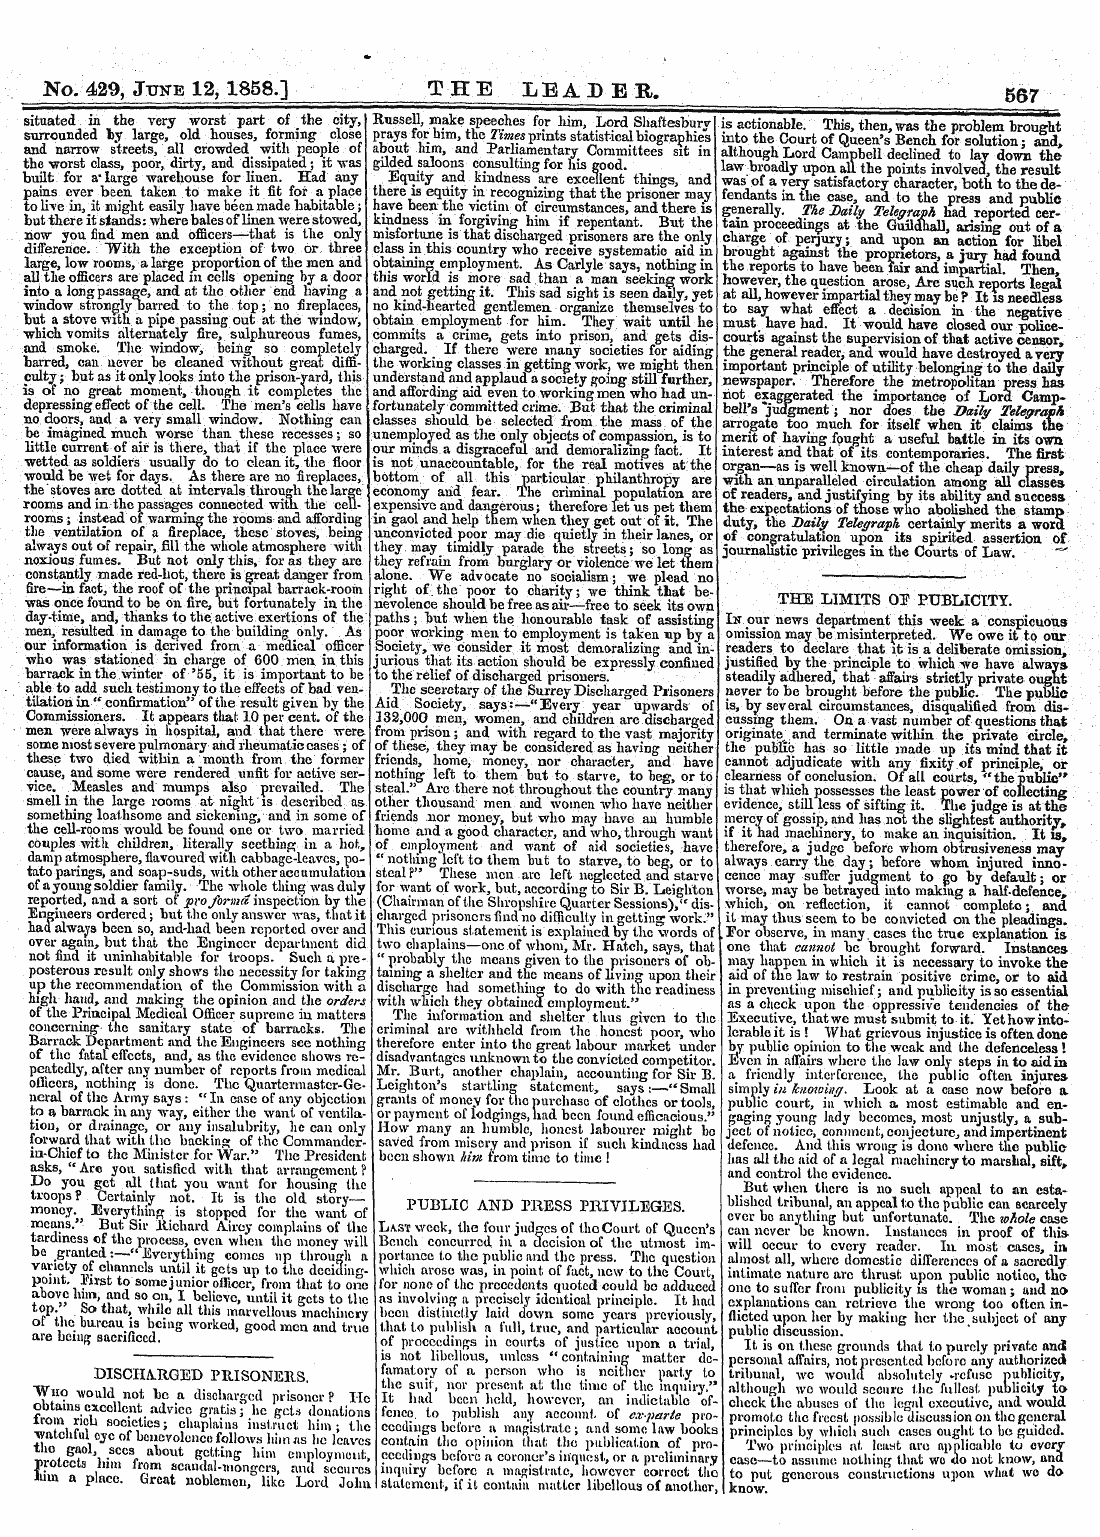 Leader (1850-1860): jS F Y, 2nd edition - Oammry Rmnttm Nif Twf Atttvtv Sanitary Condition Ok 1m_ A±Tjmy